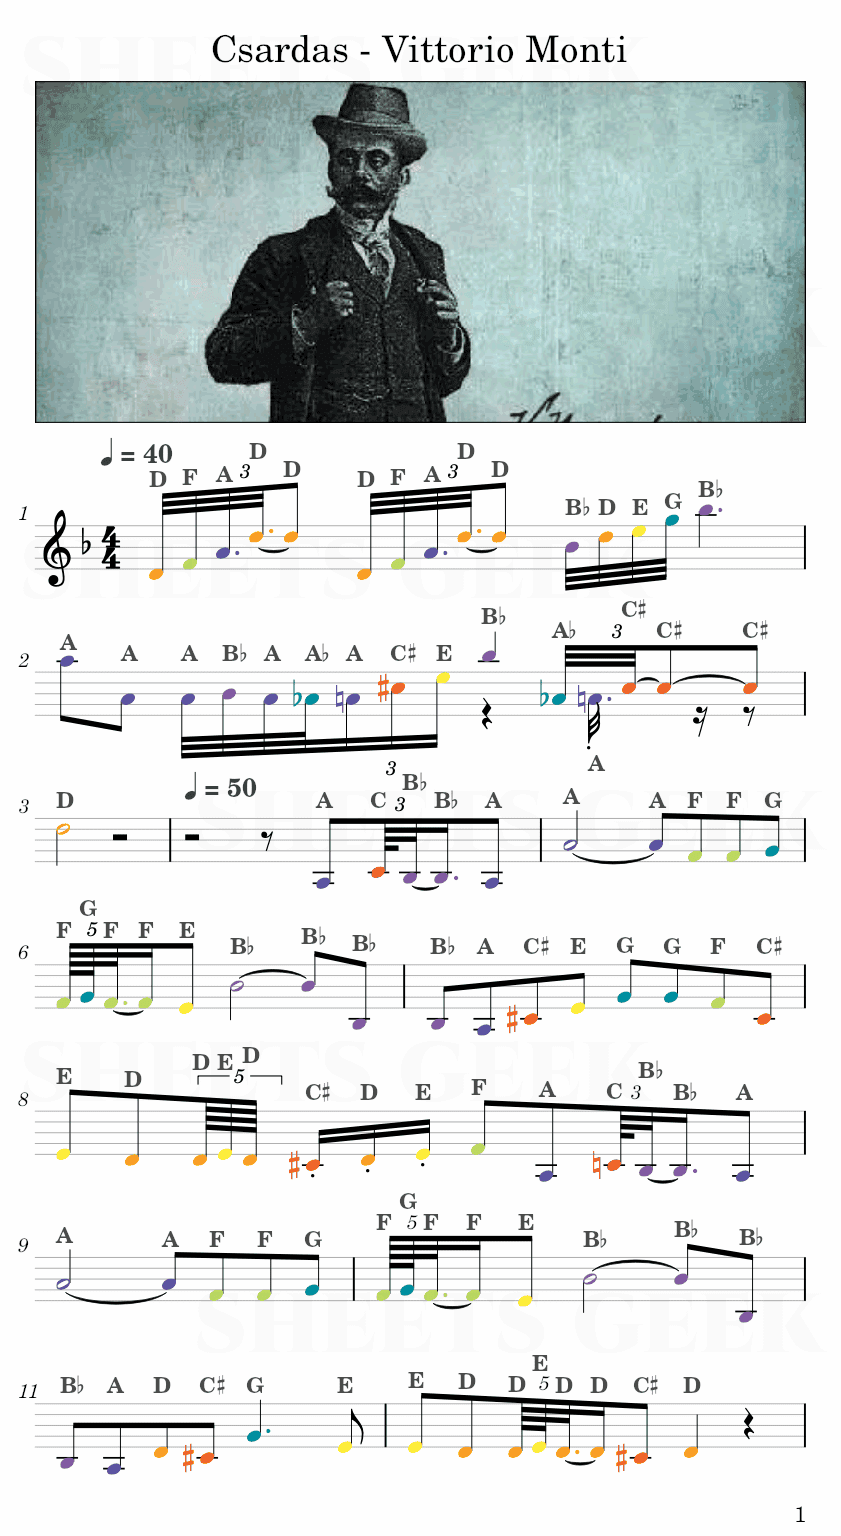 Czardas - Vittorio Monti Easy Sheet Music Free for piano, keyboard, flute, violin, sax, cello page 1